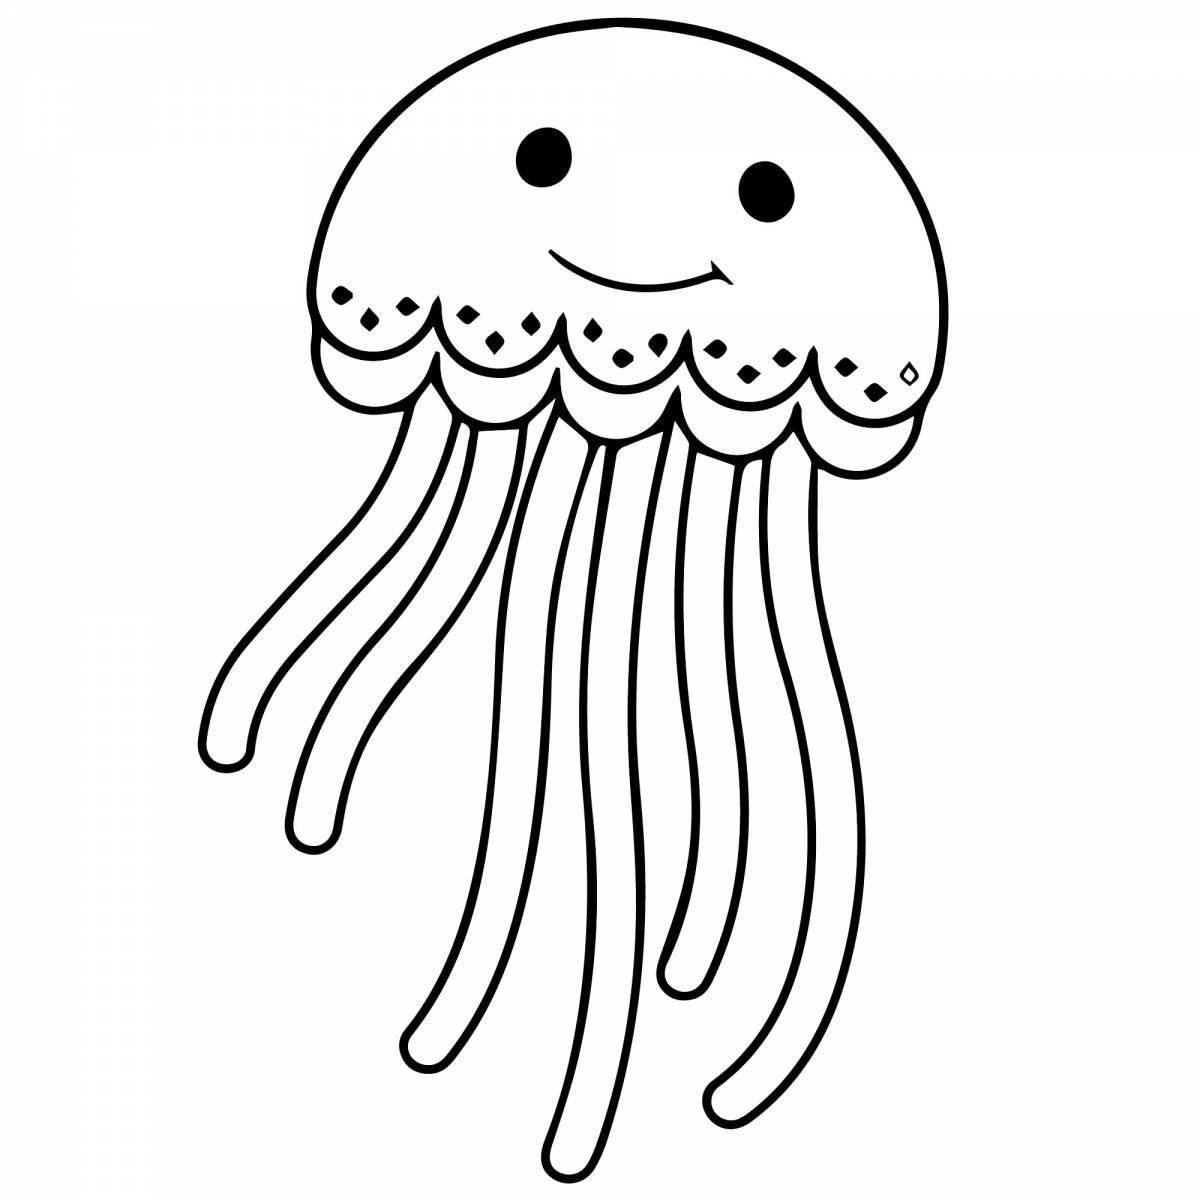 Fun jellyfish coloring book for kids